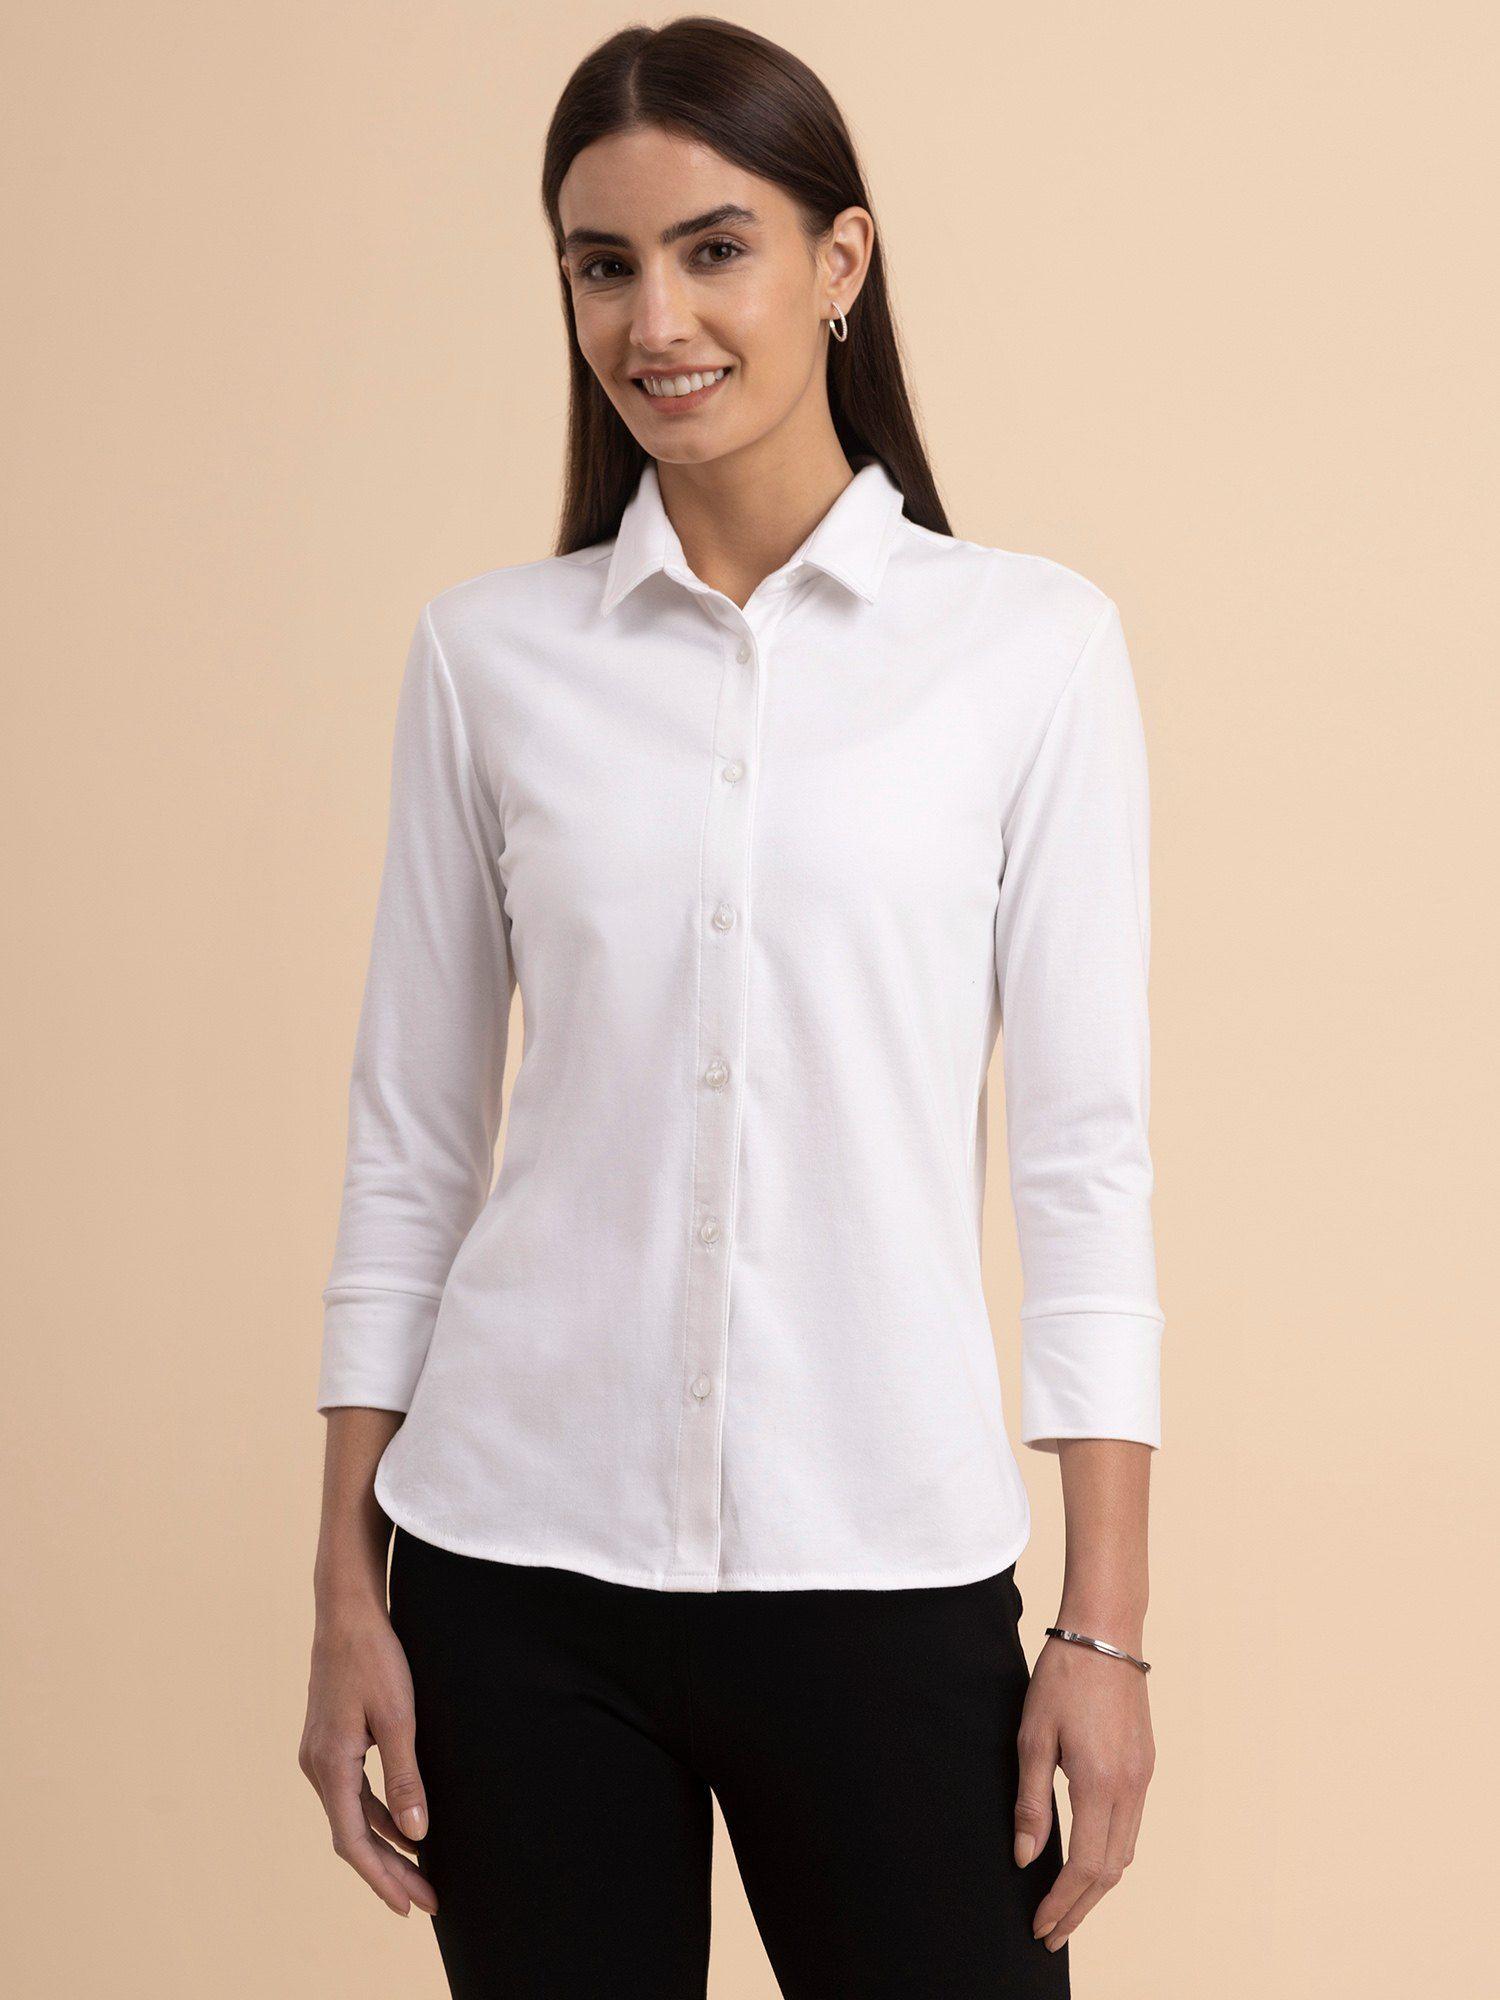 livin button down knit shirt - white